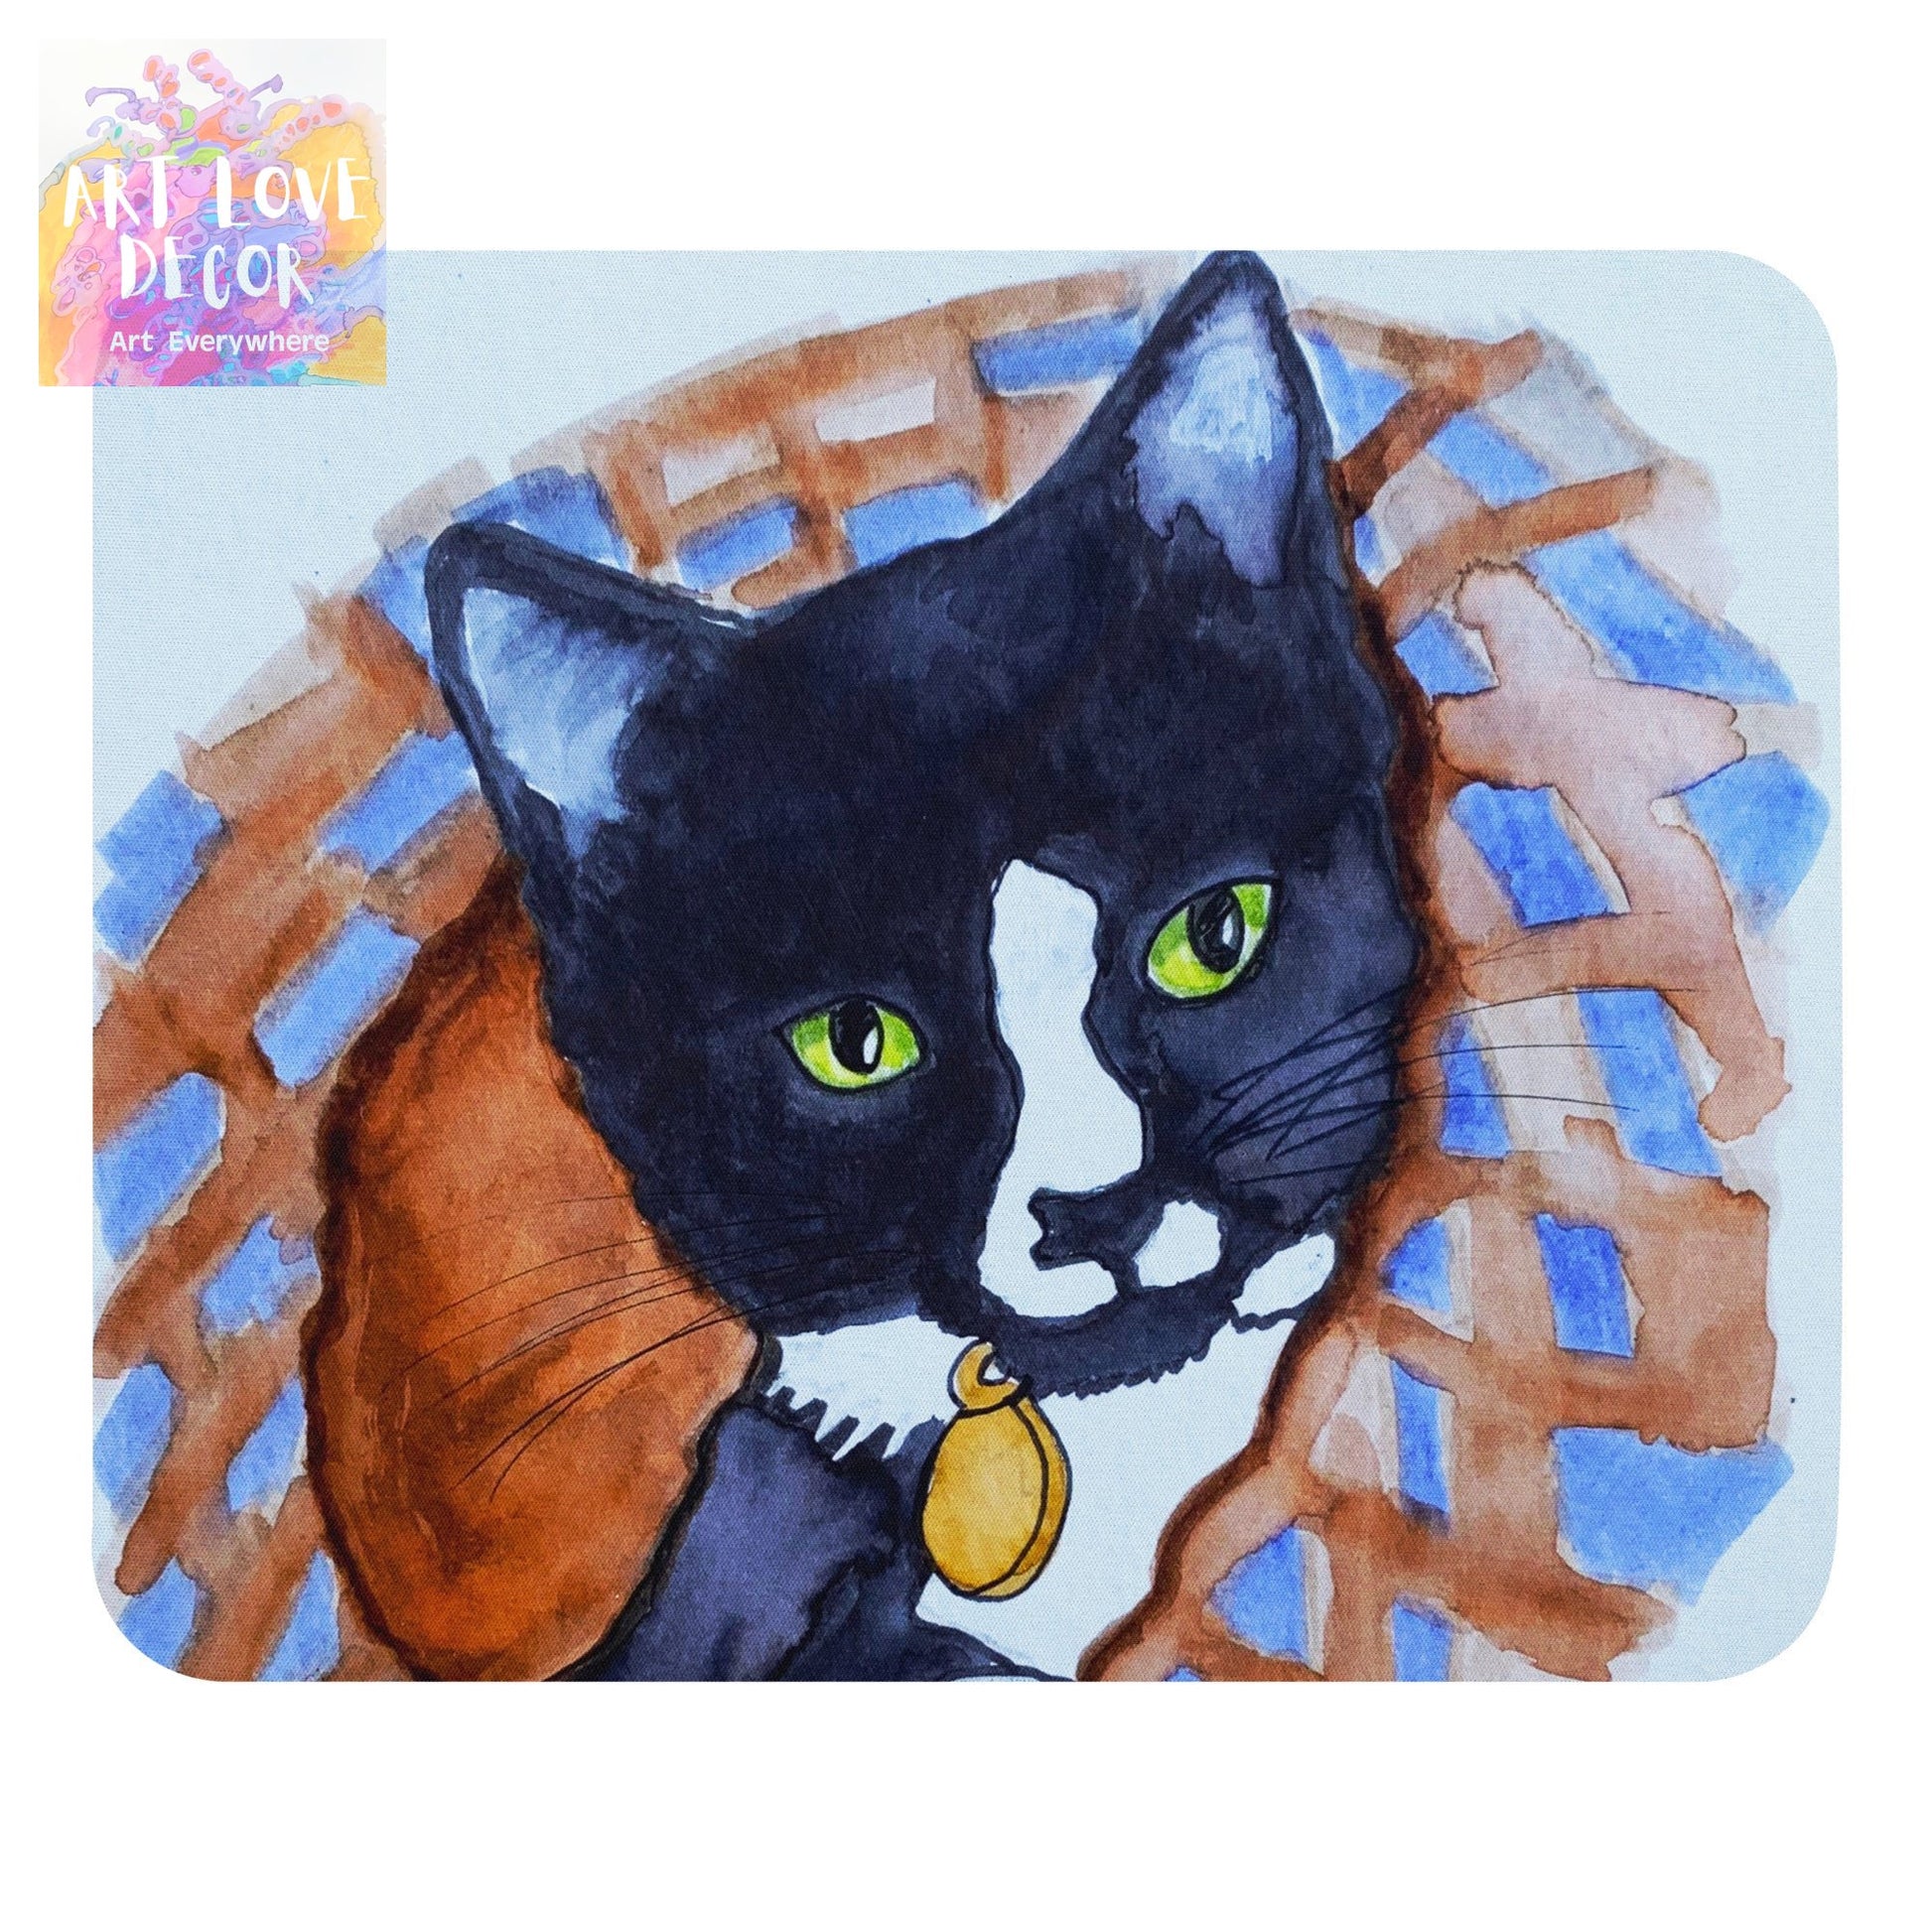 Tuxedo Cat Mouse pad - Art Love Decor